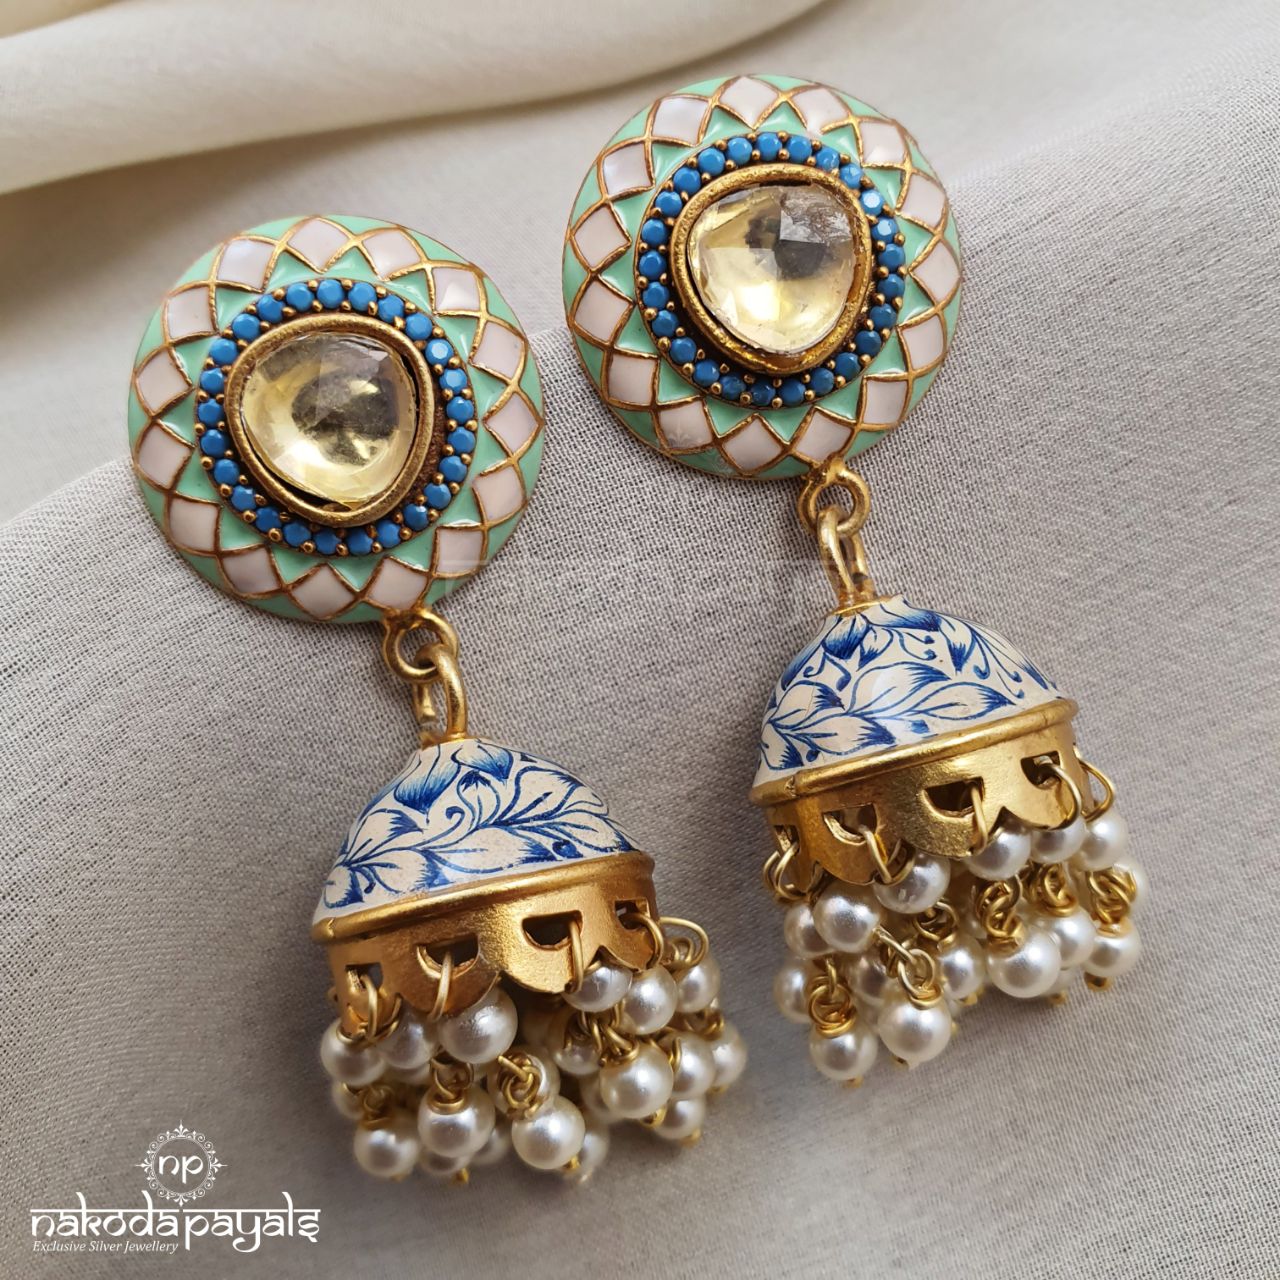 22K Gold Meenakari Jhumka Earrings (5.80G) - Queen of Hearts Jewelry